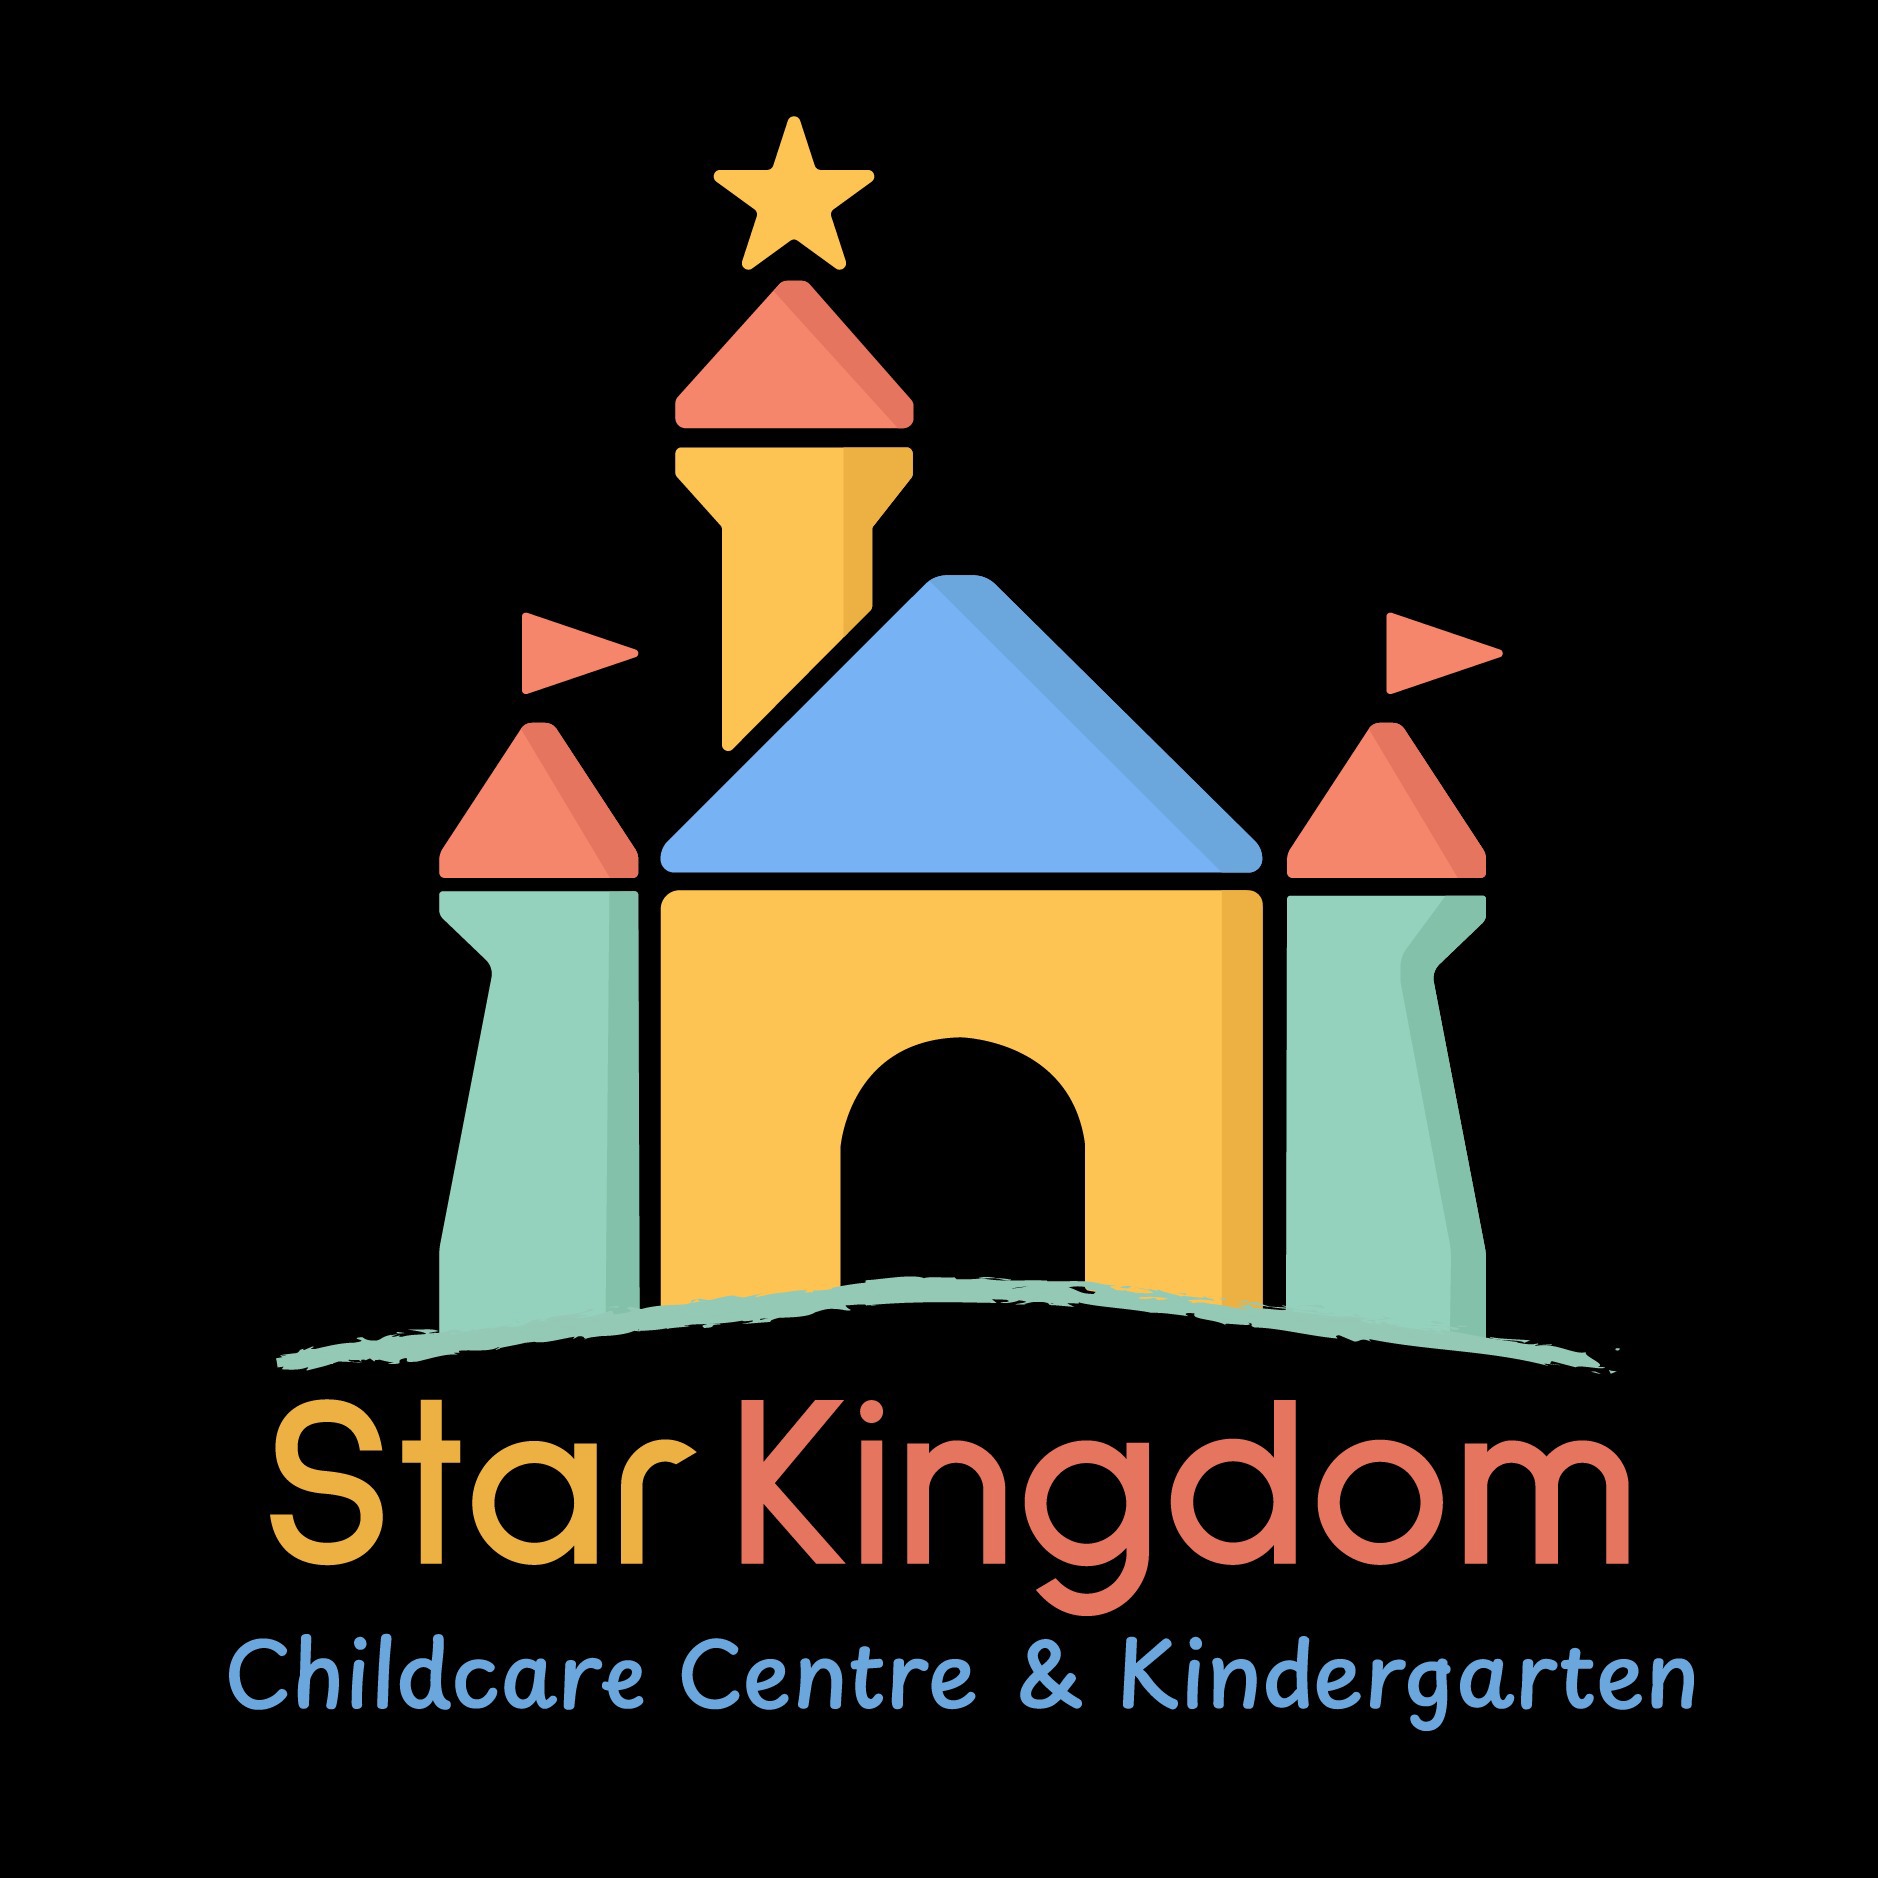 Star Kingdom Childcare Centre & Kindergarten